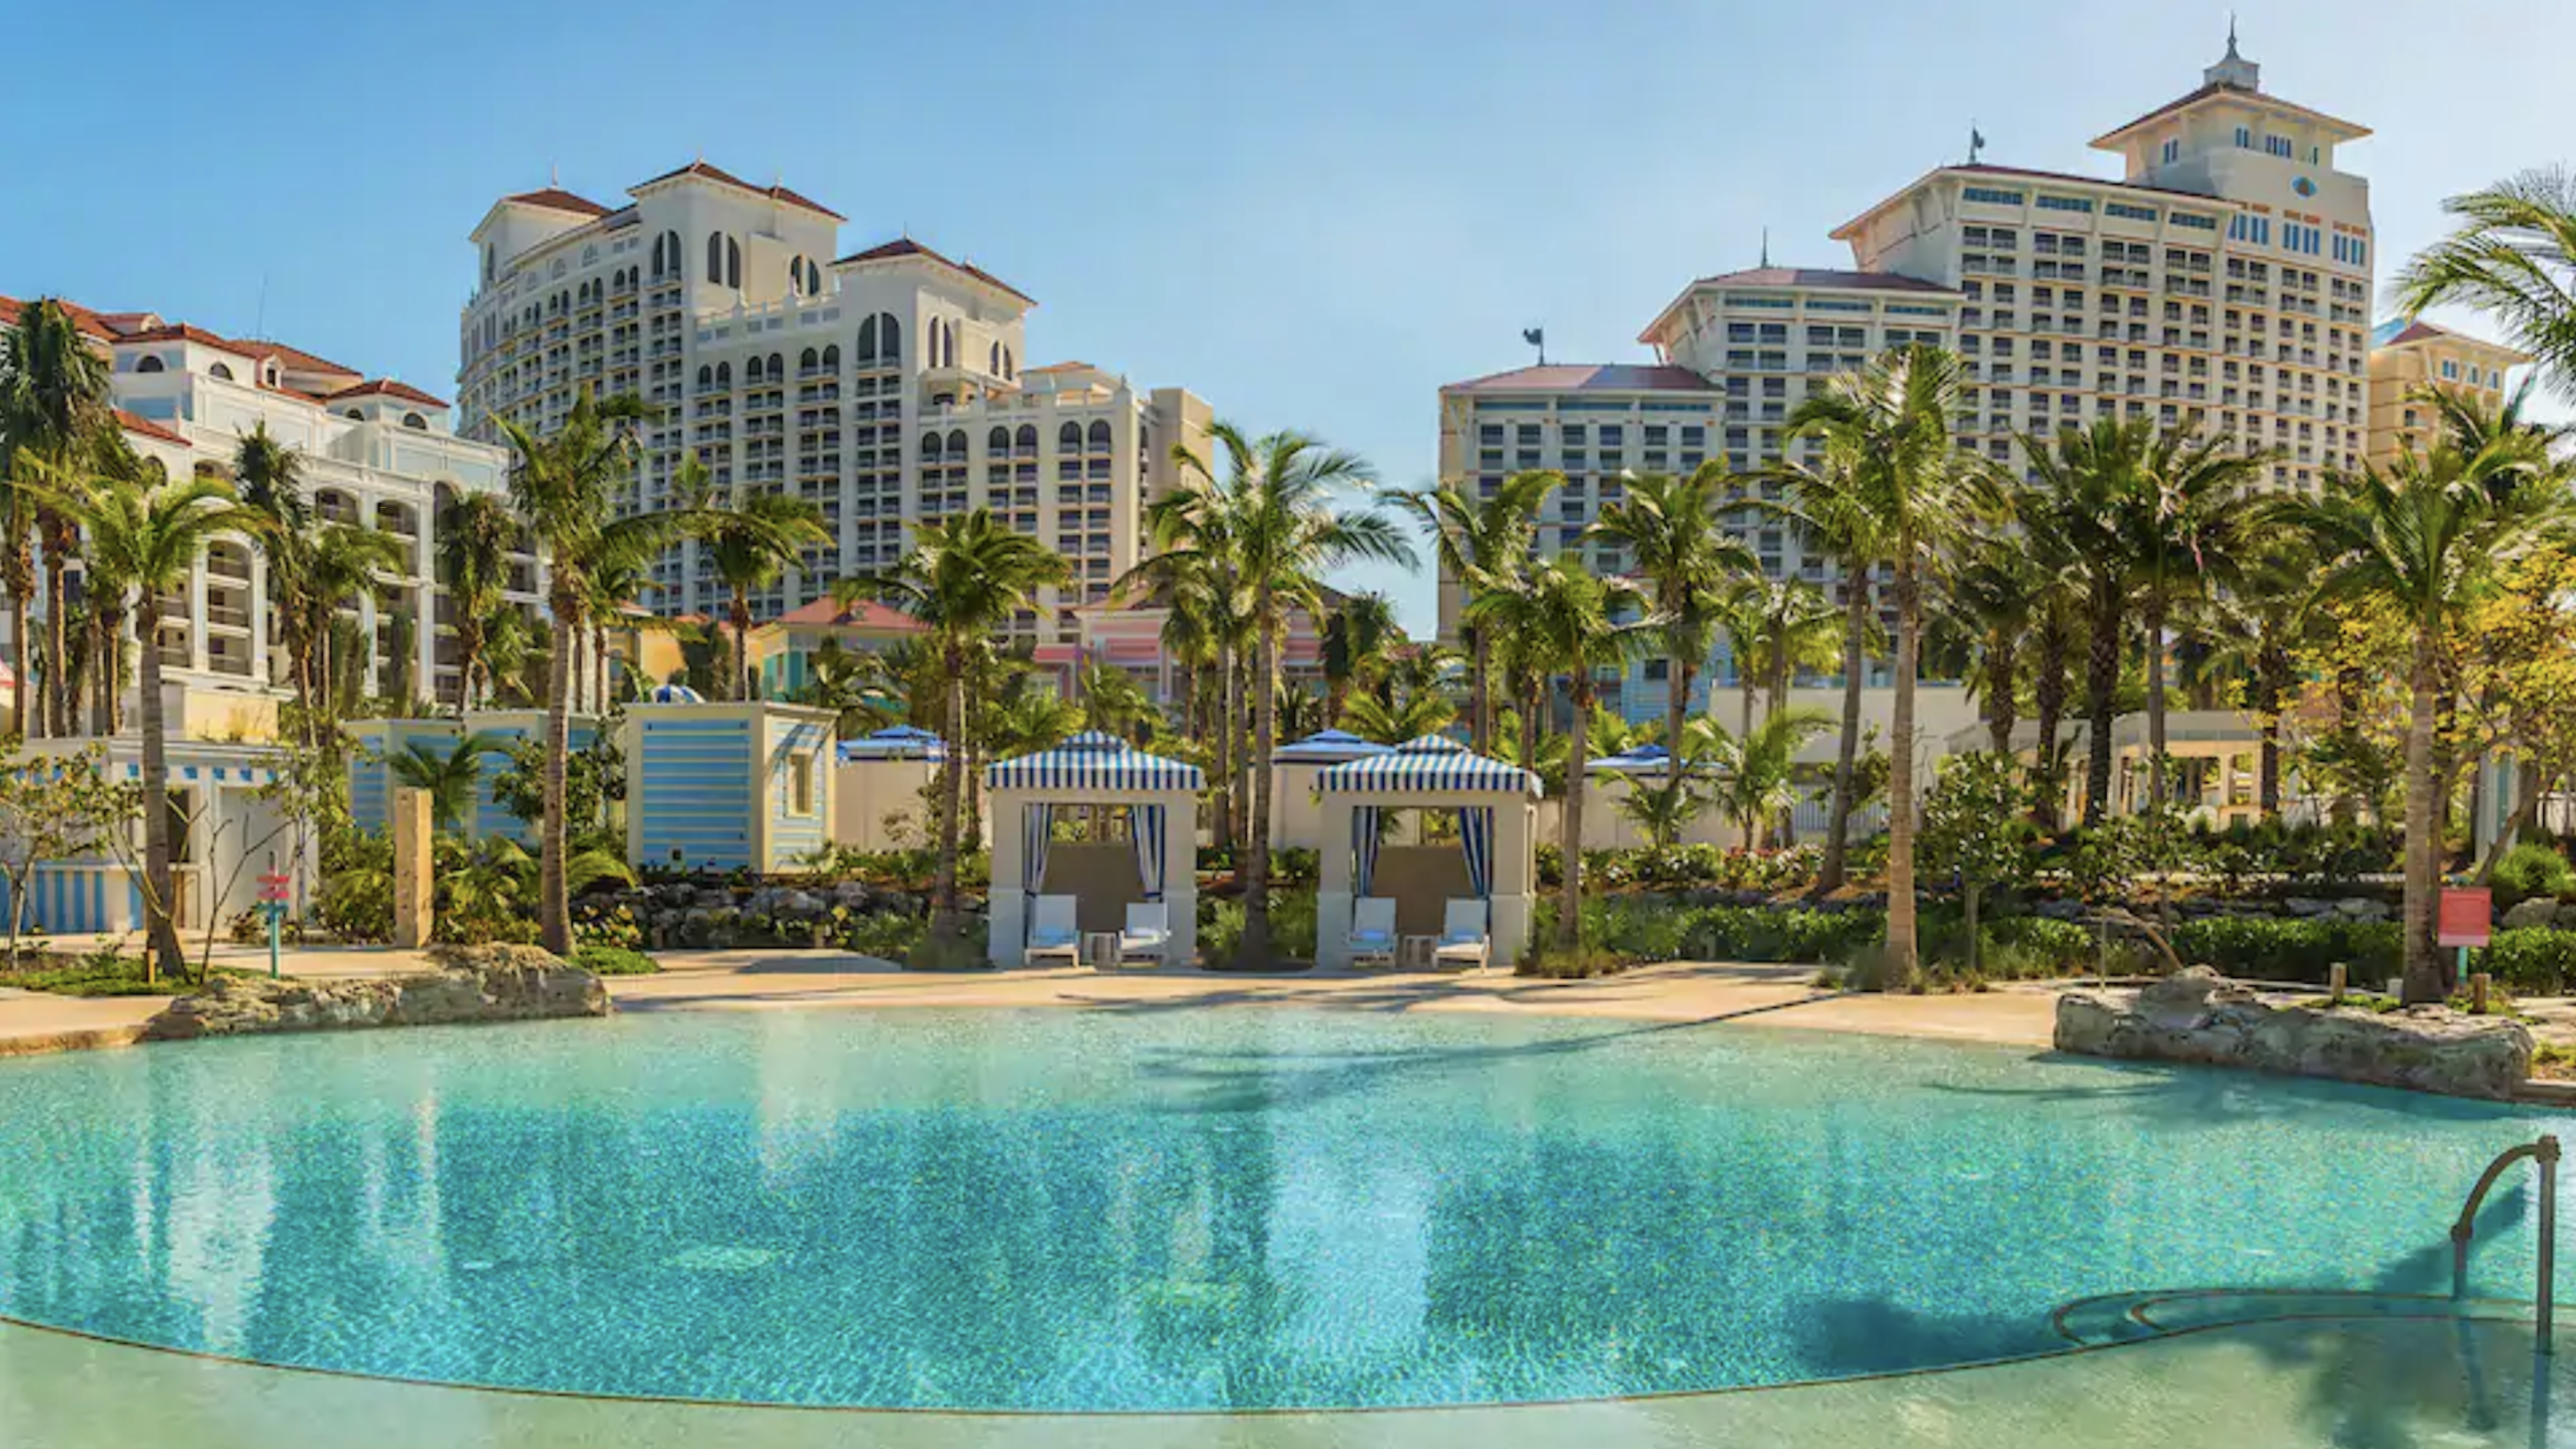 The Flamingo Hilton Hotel & Resort Pool Editorial Stock Photo